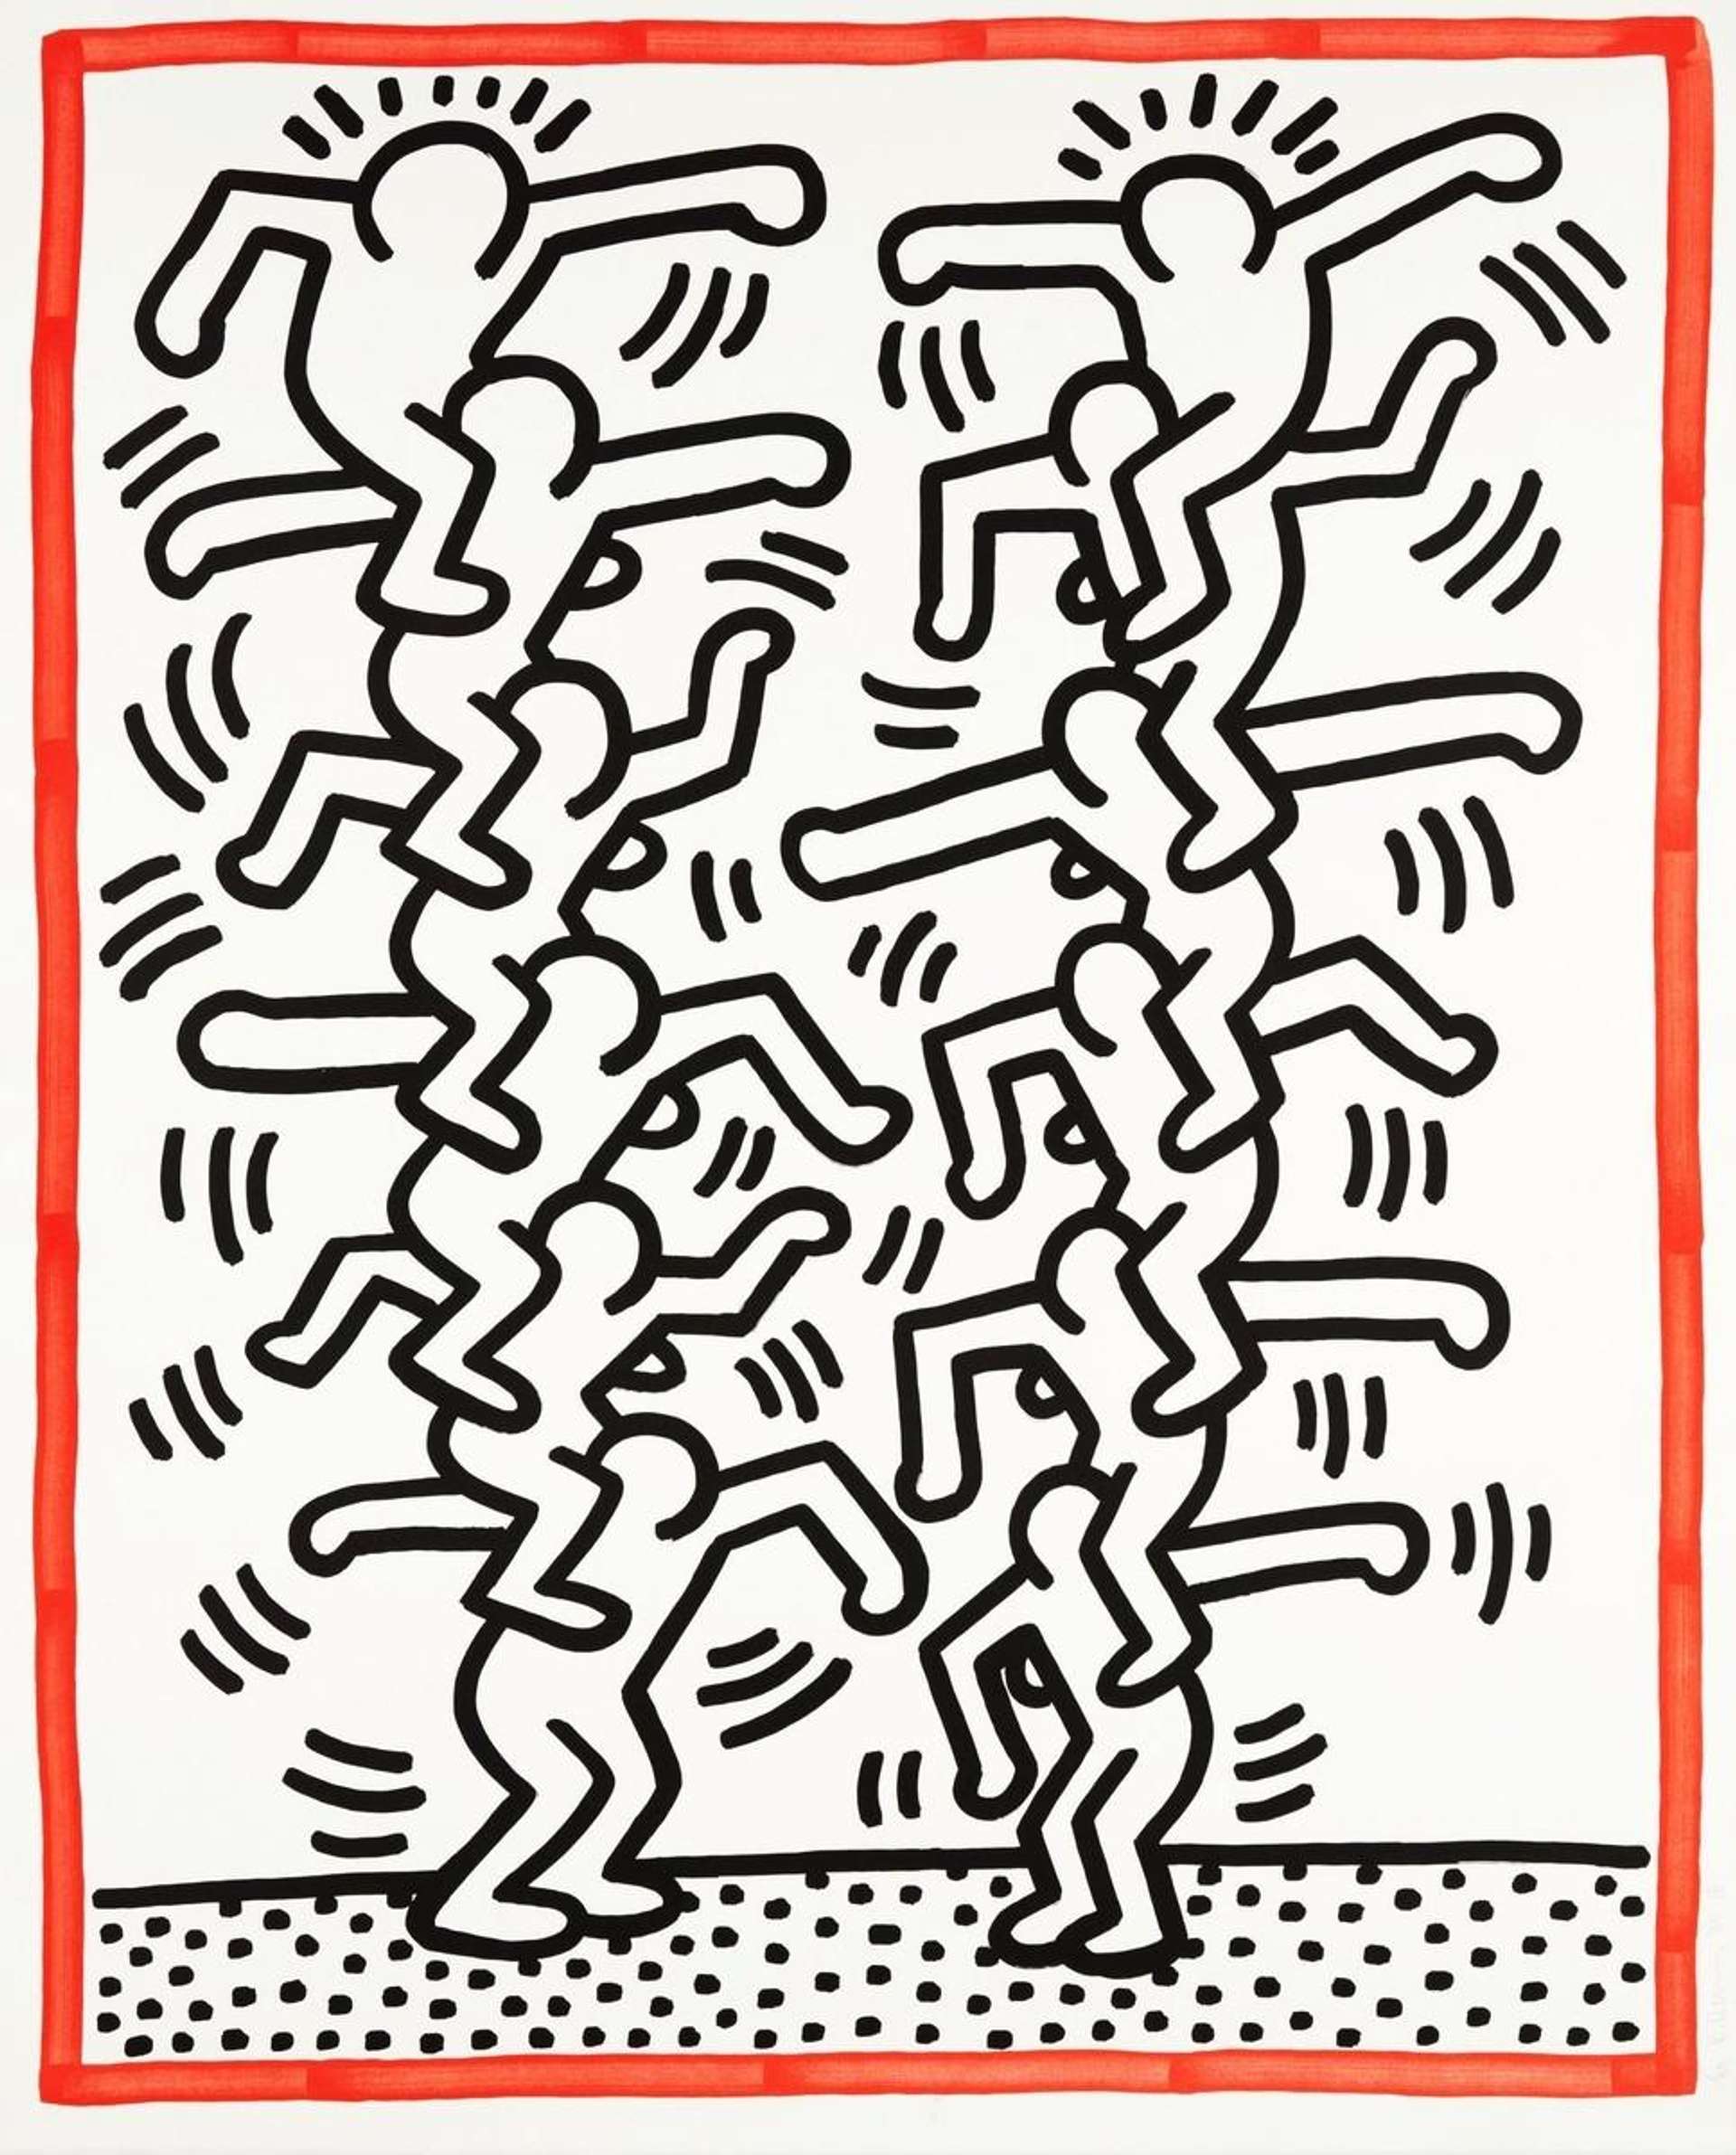 Keith Haring: Three Lithographs 3 - Signed Print